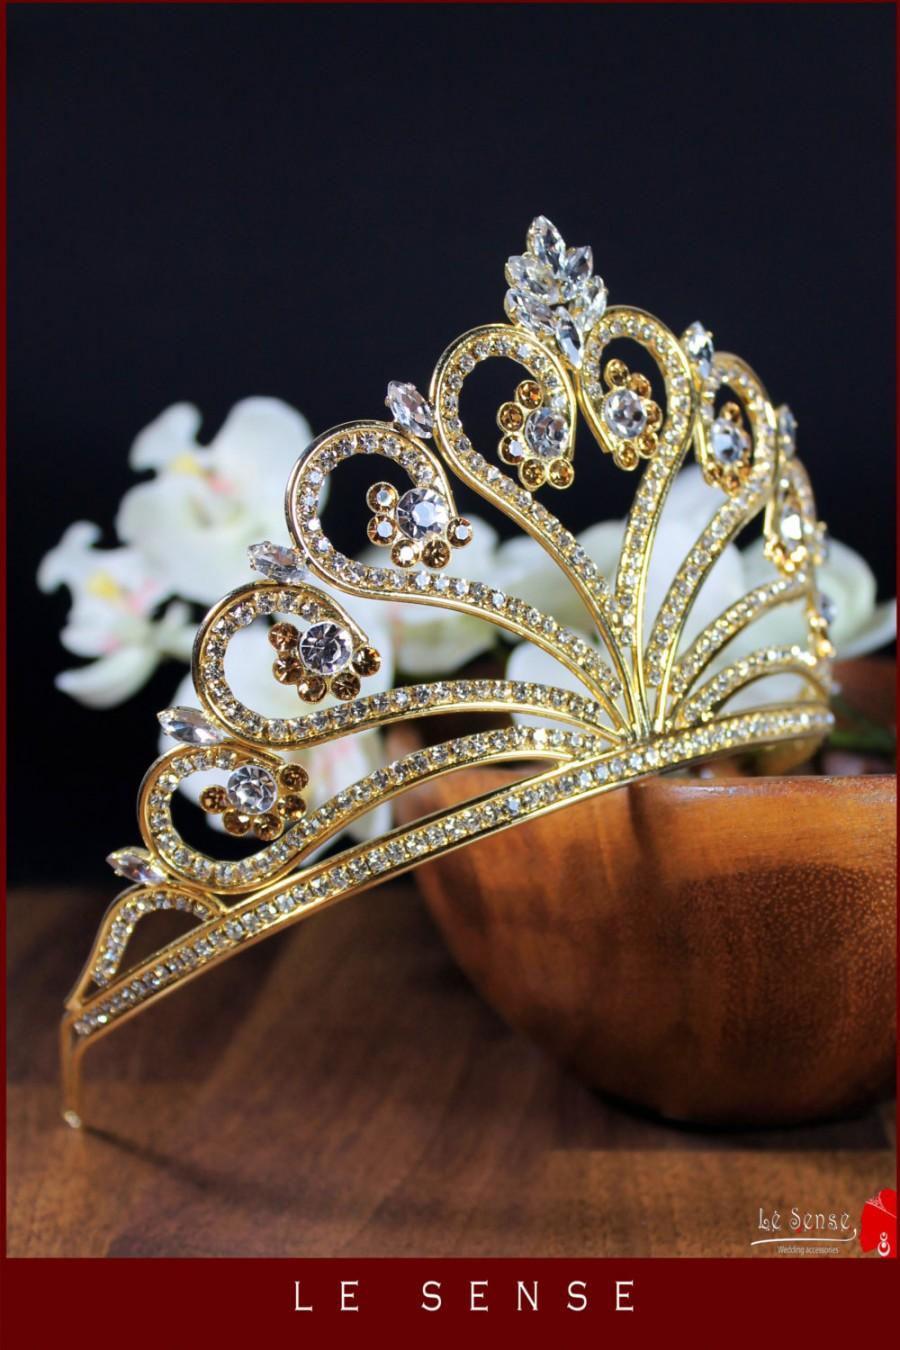 Wedding - Unique handmade gold princess tiara, wedding tiara, crystal tiara handmade for order inlaid with various SWAROVSKI Crystals shapes - $175.00 USD